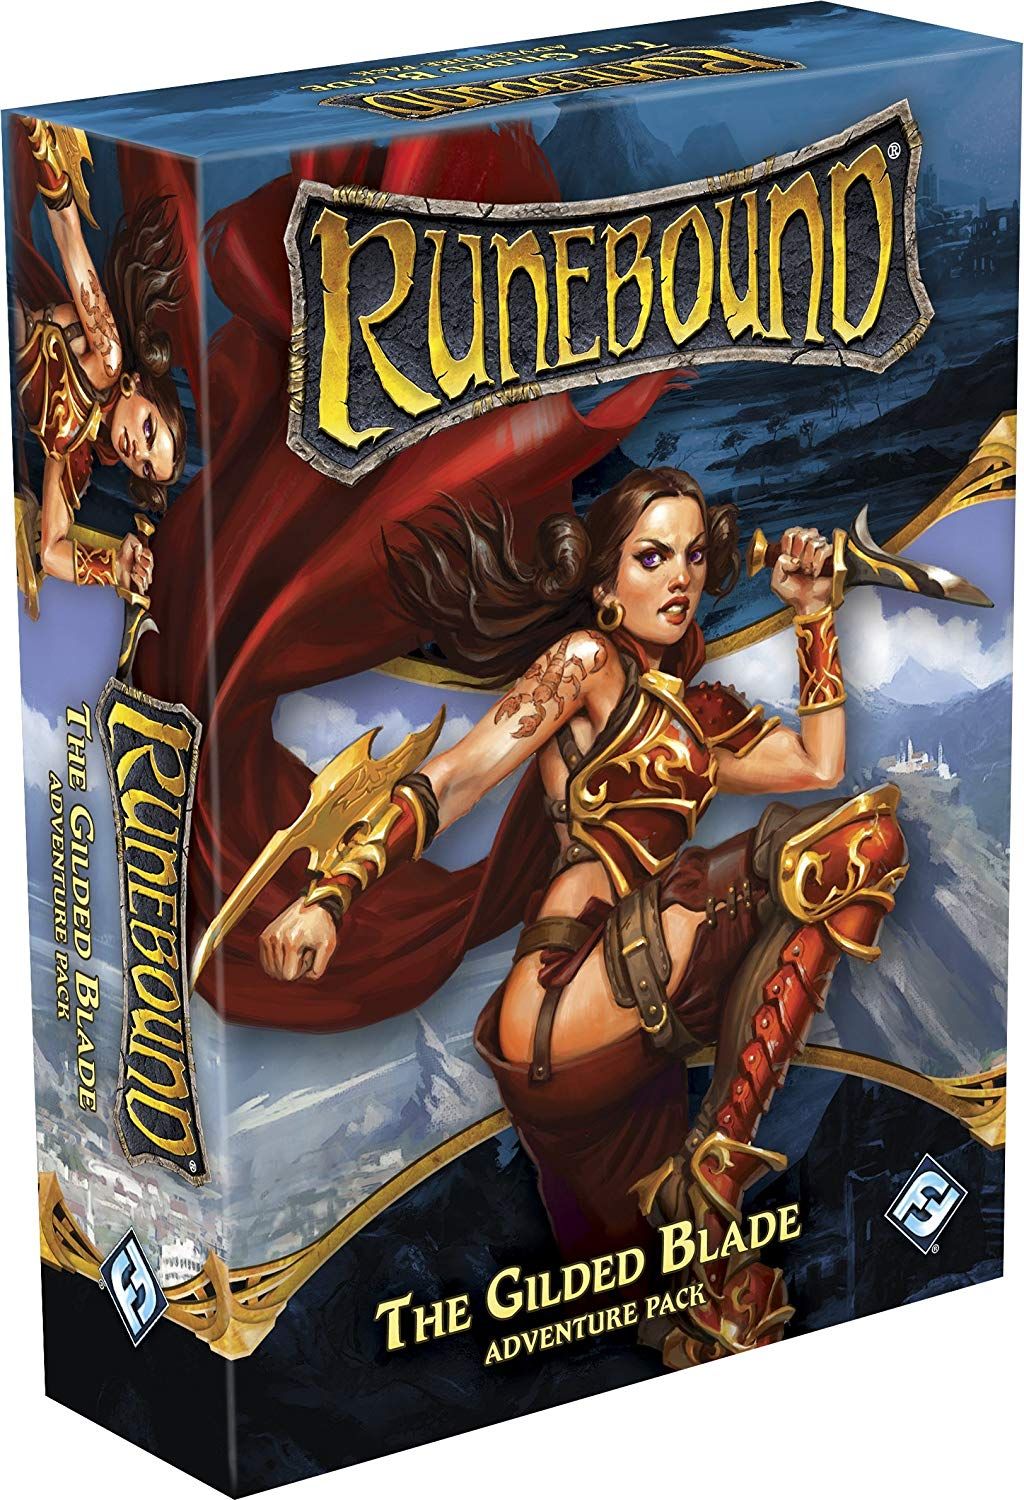 Настольная игра Hobby World Runebound The Gilded blade дополнение на английском языке настольная игра crowd games cga02001 windmill cozy stories на английском языке